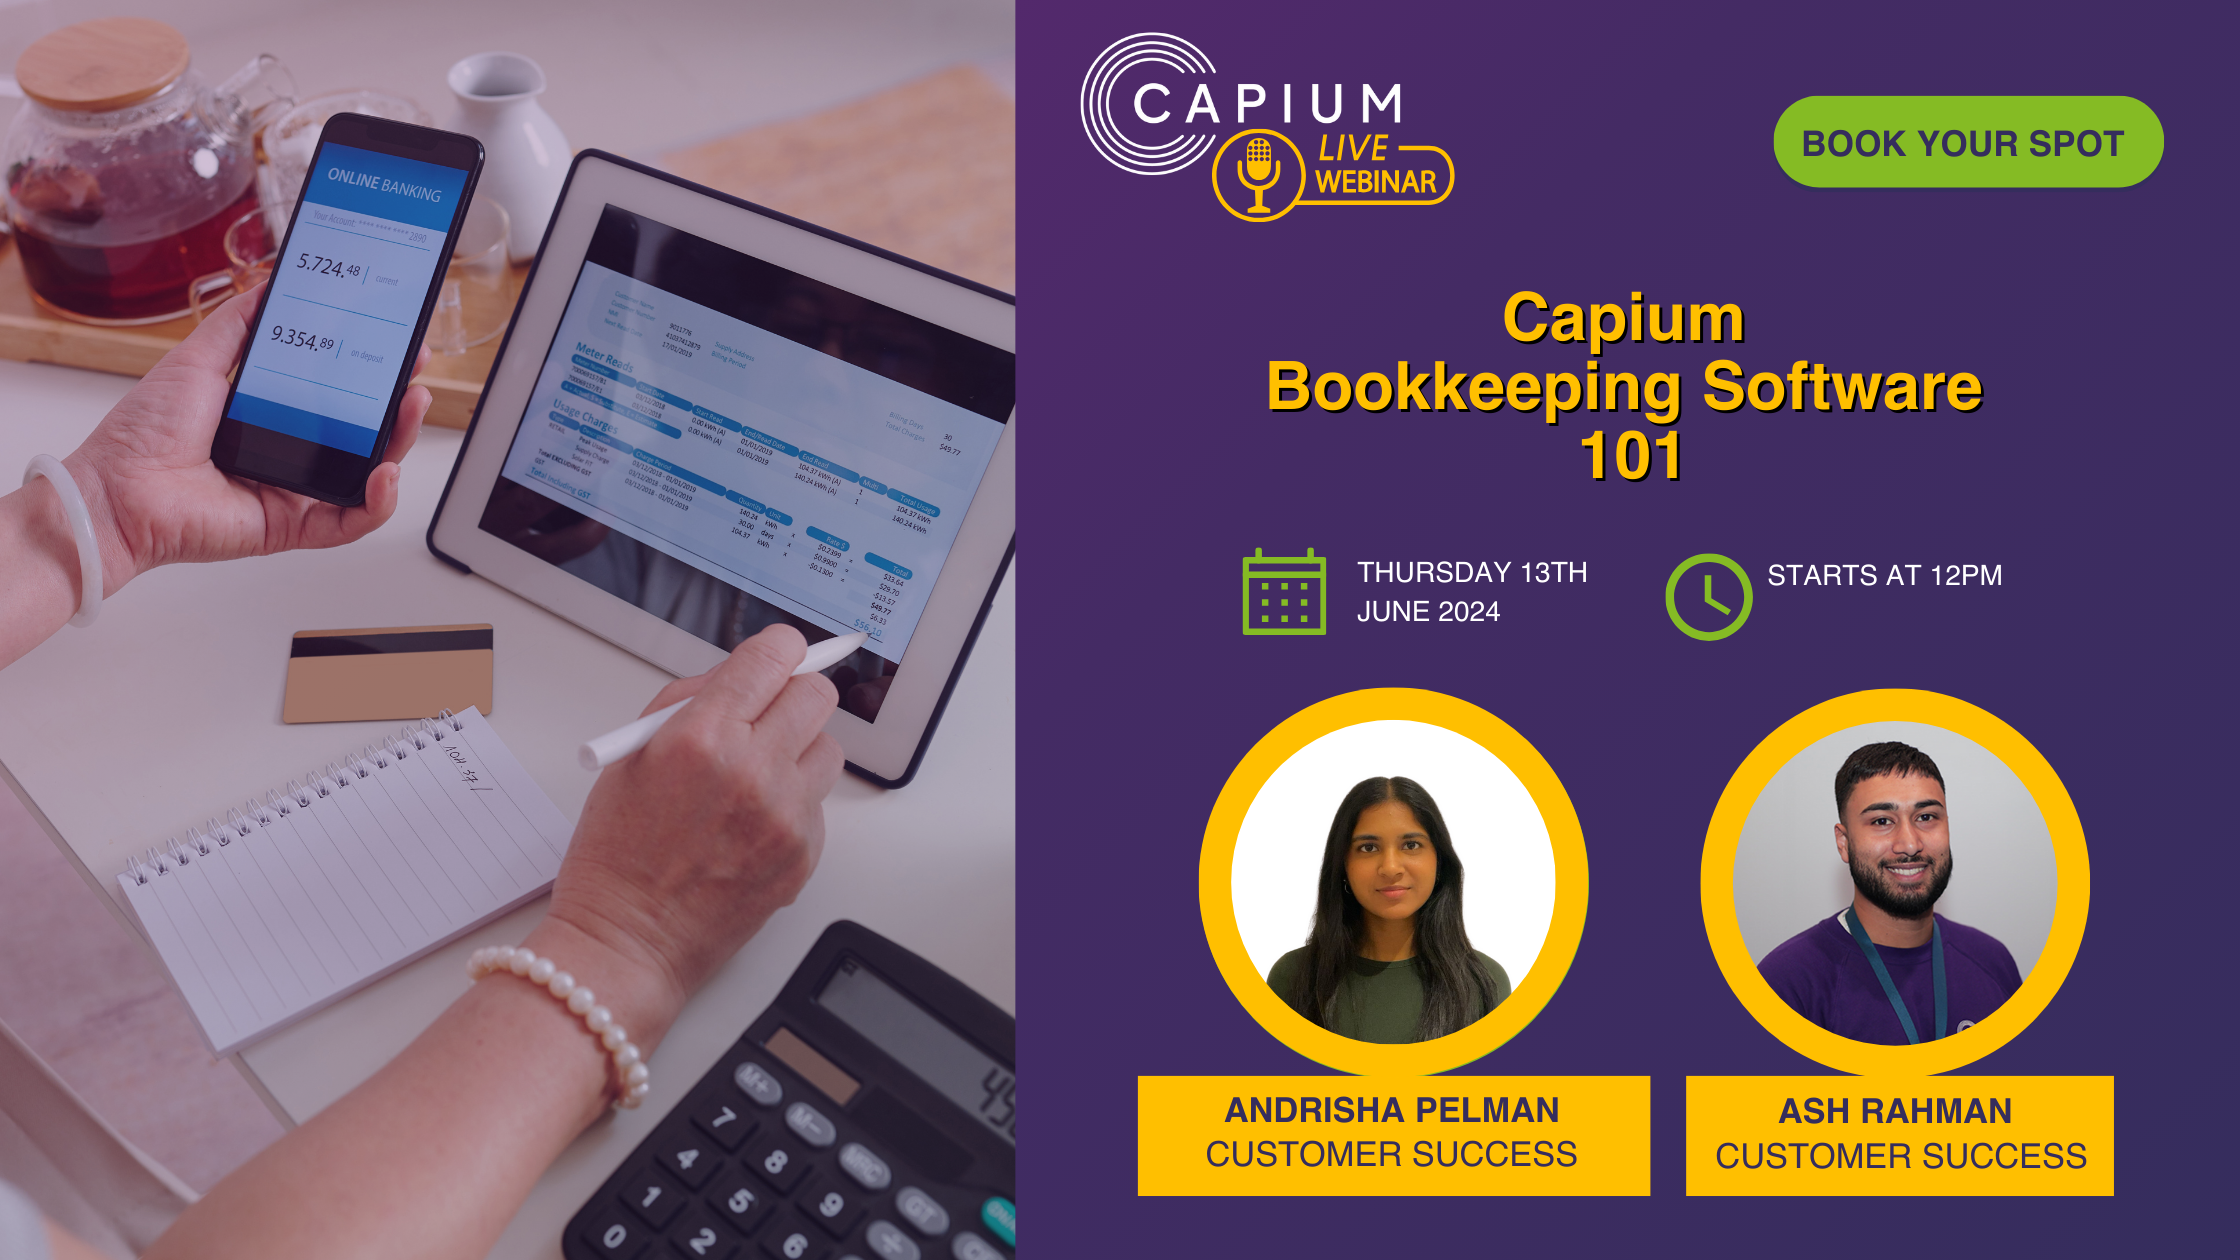 Capium Bookkeeping Software 101 logo